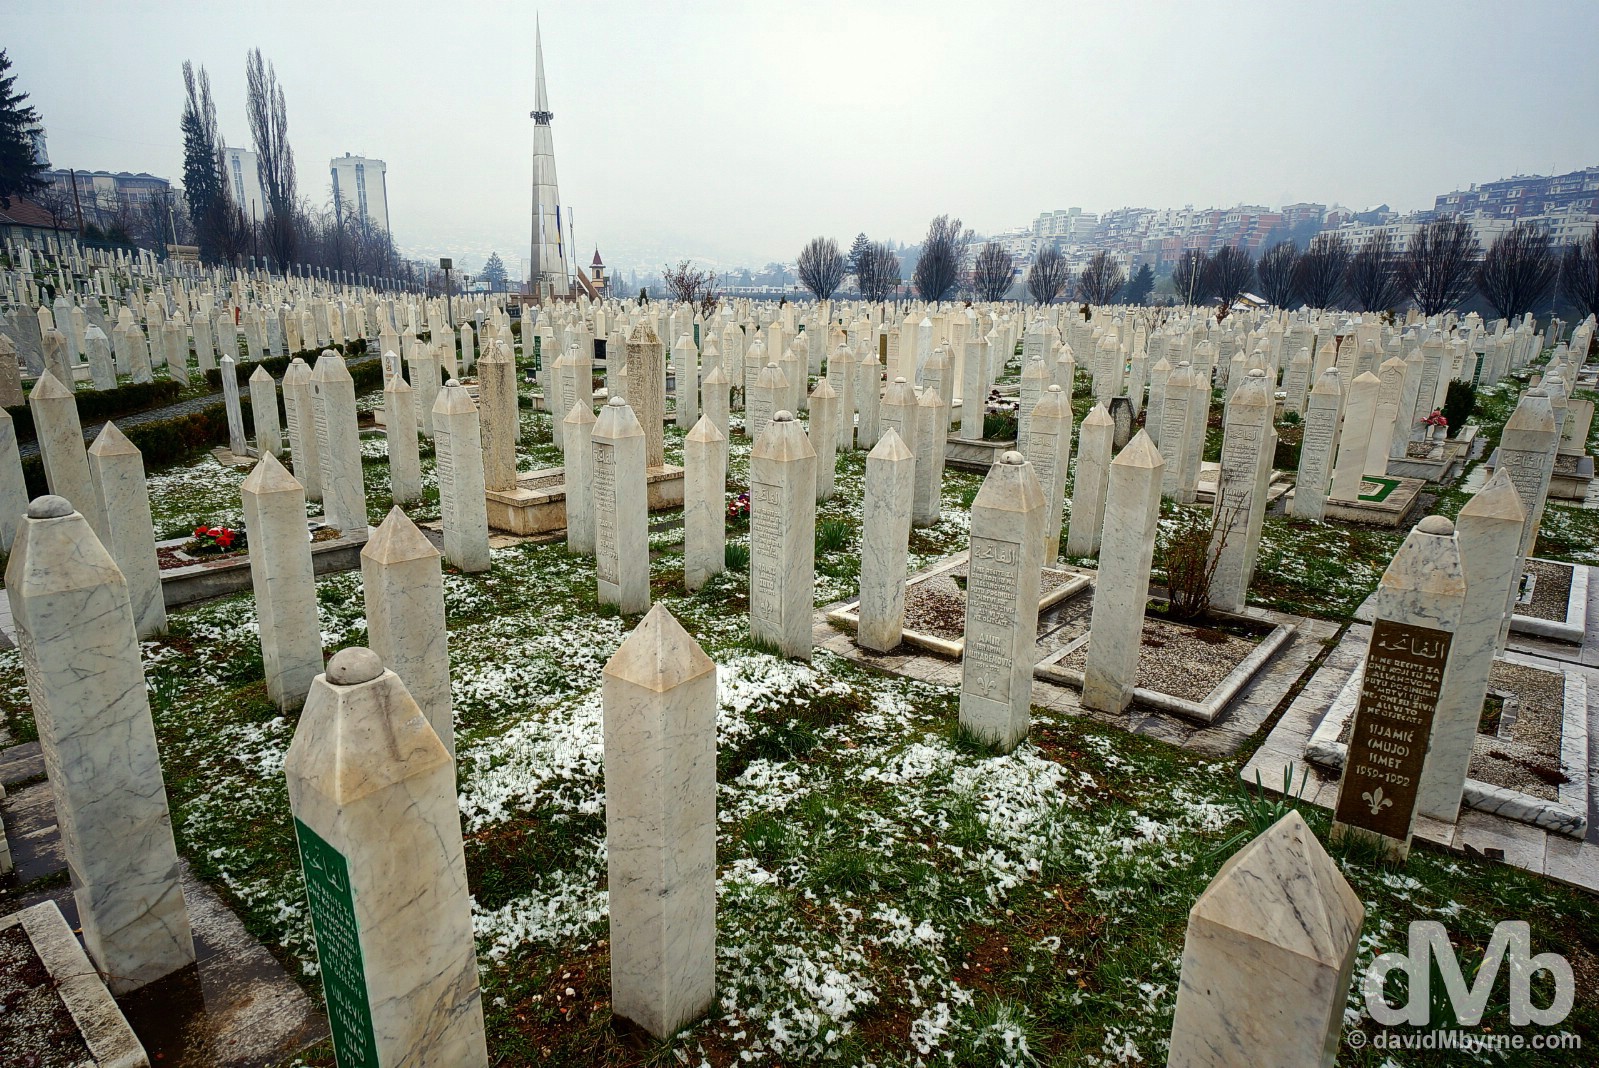 Gradsko groblje Bare cemetery, Sarajevo, Bosnia and Herzegovina. April 5, 2015.